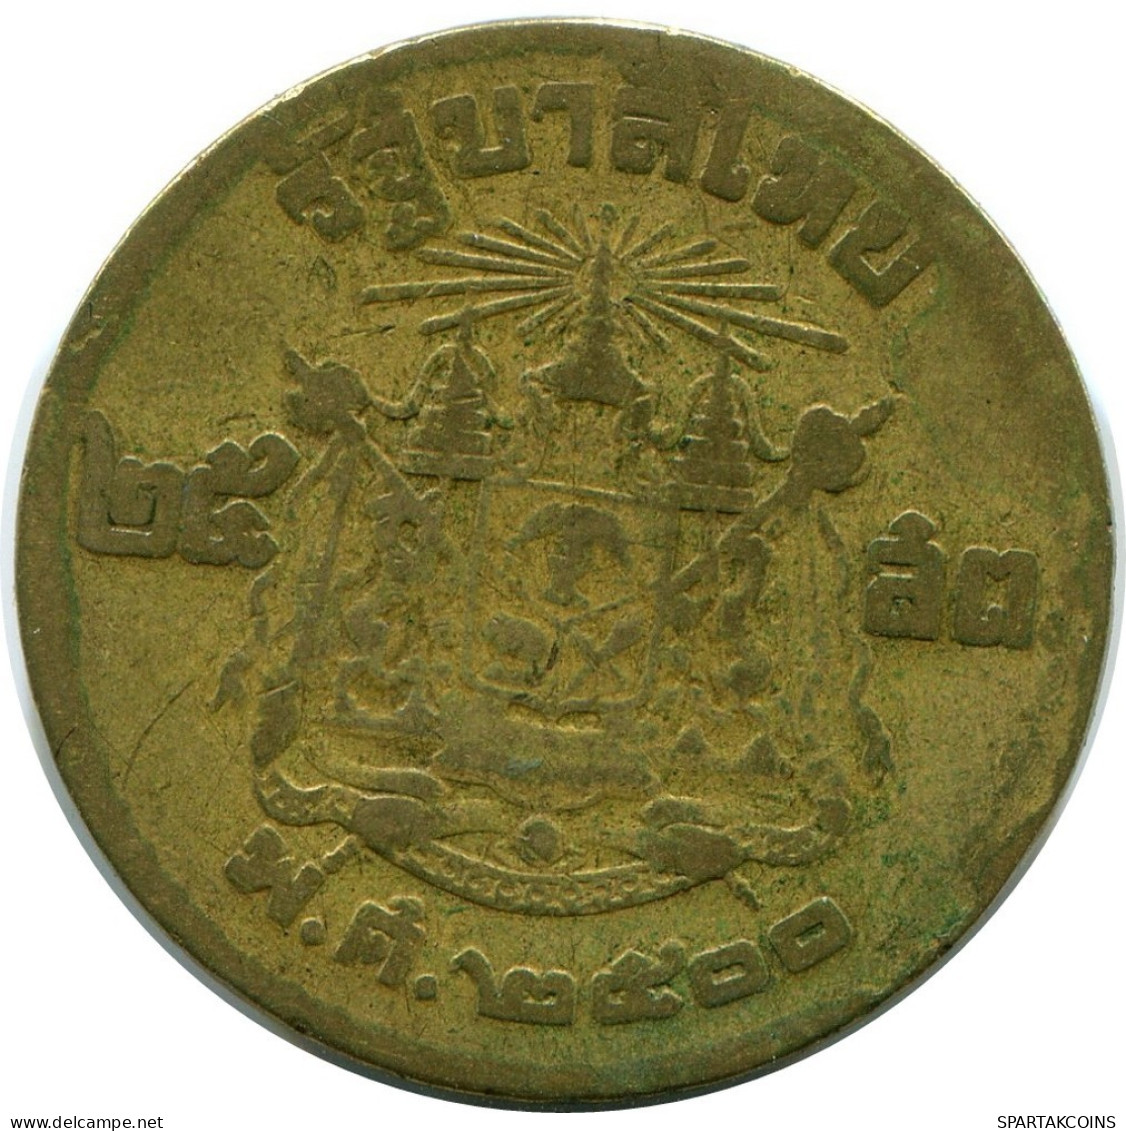 25 SATANG 1957 THAILAND RAMA IX Coin #AZ123.U.A - Thailand